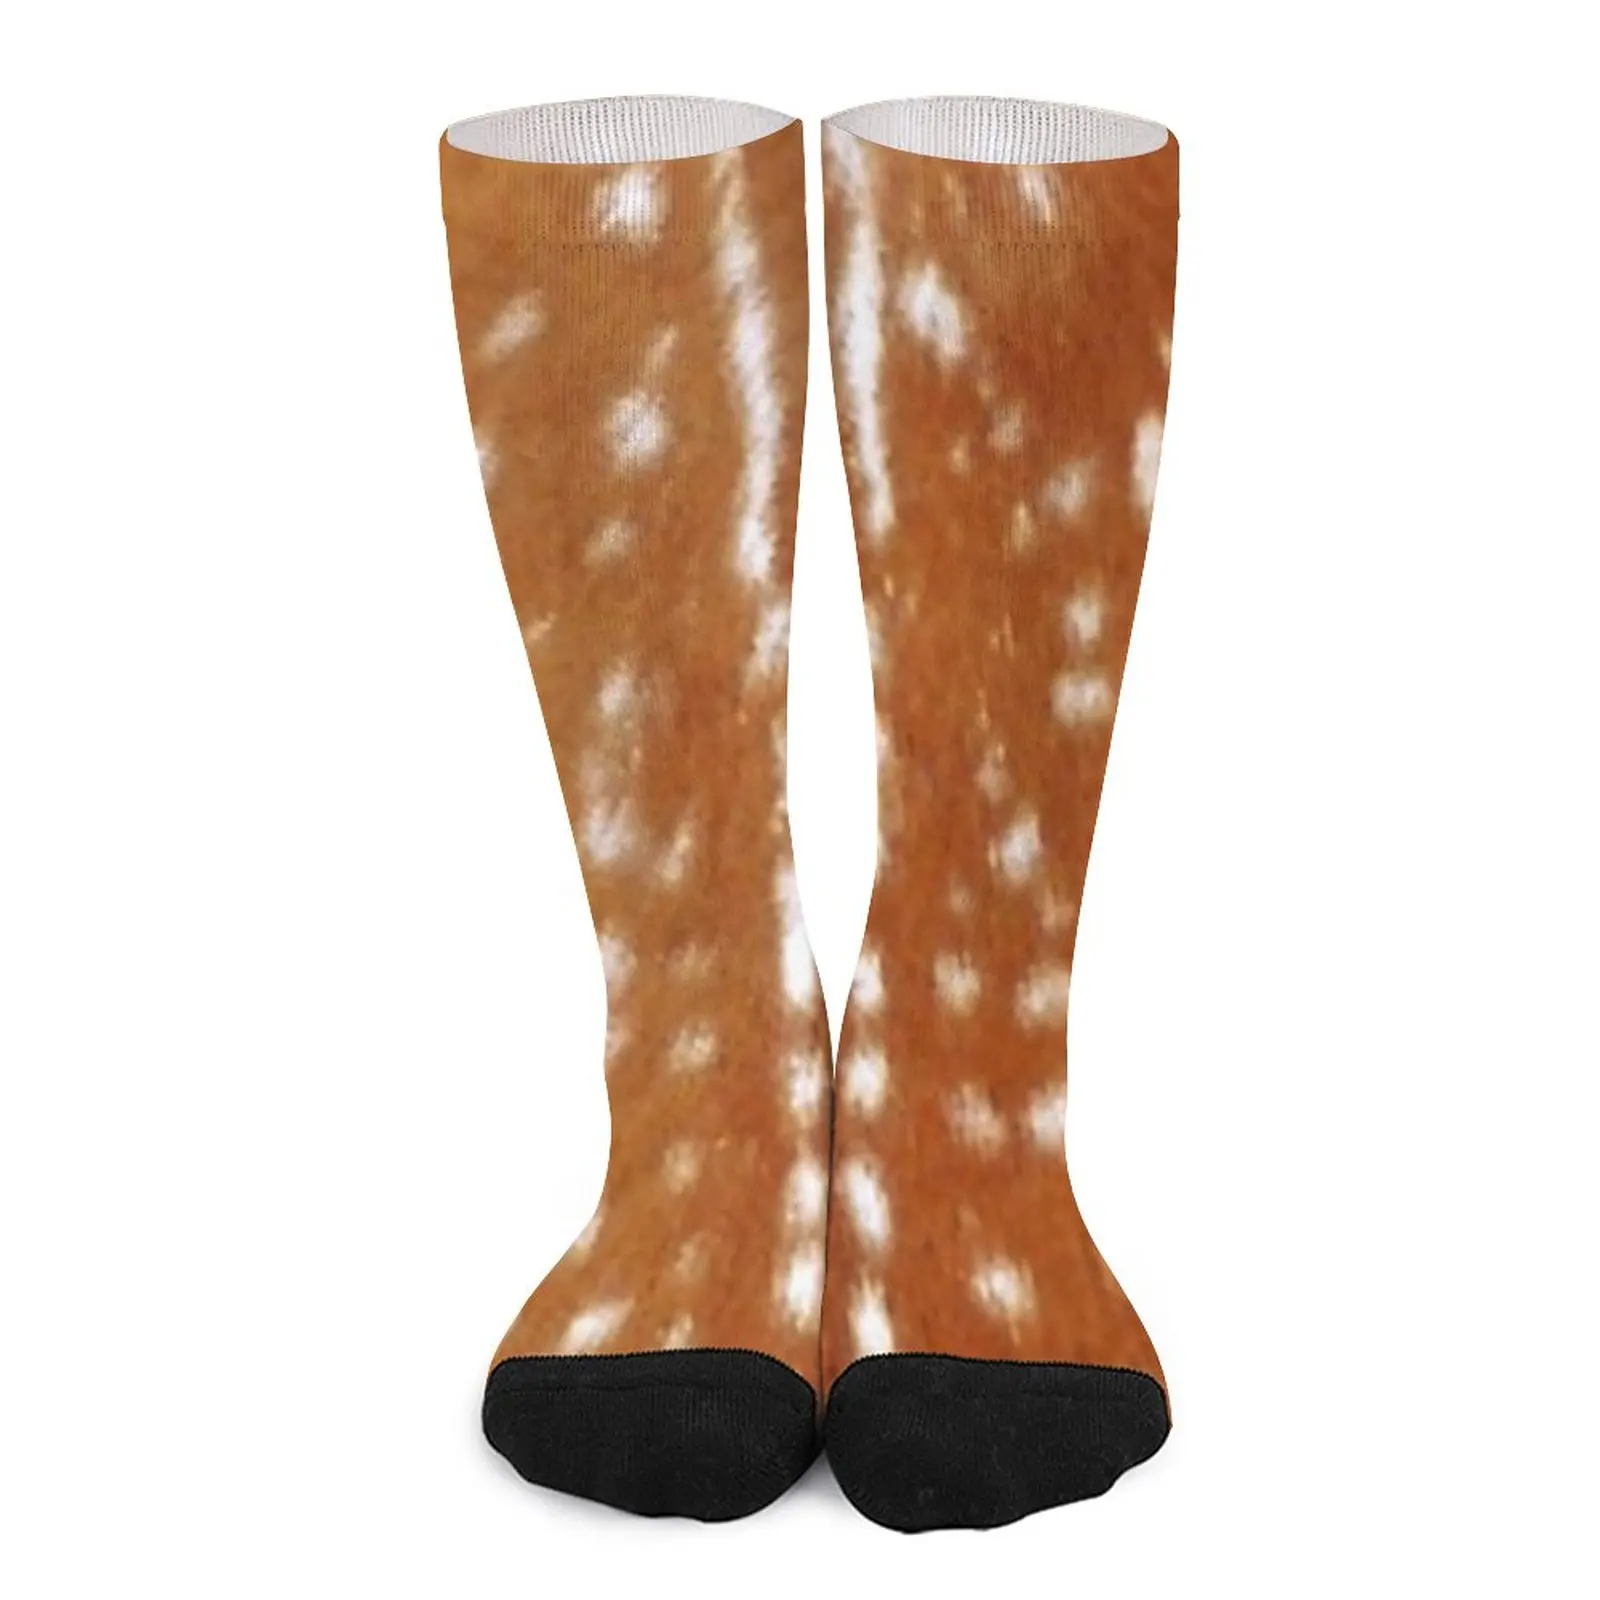 Deer hide skin brown white Socks cotton socks men socks for men Women's socks high прибор косметический face factory skin booster